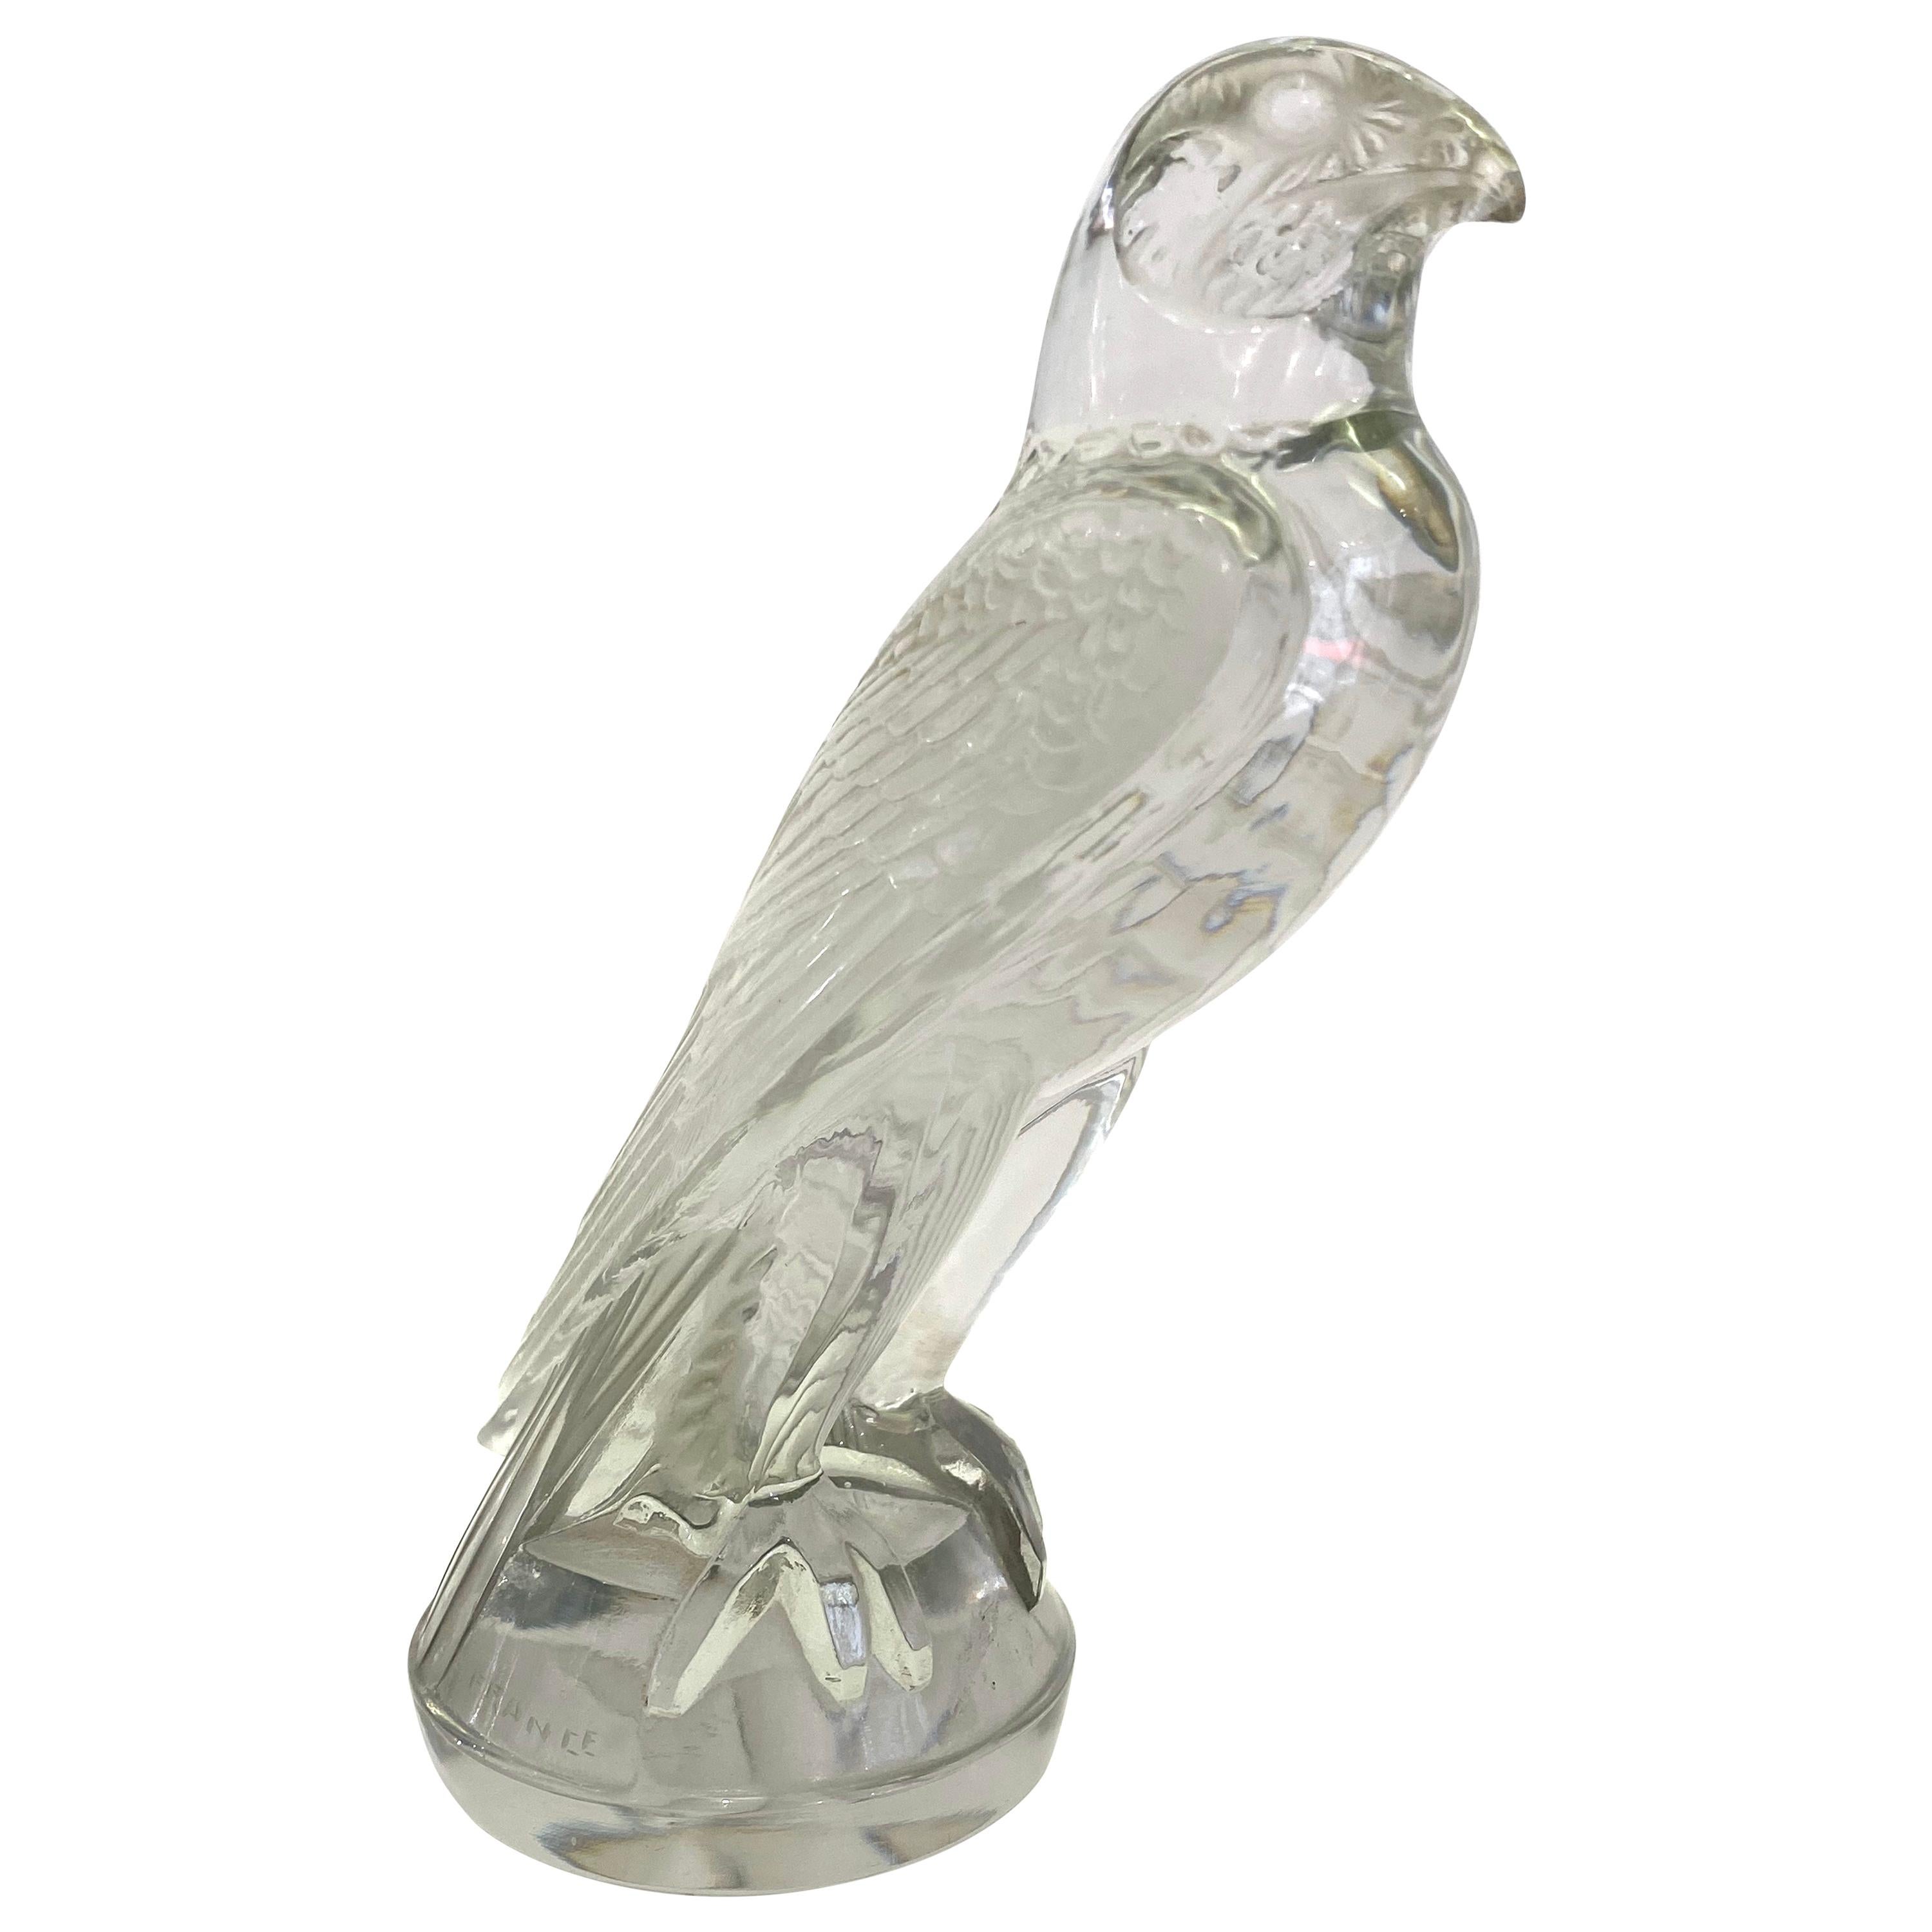 1925 René Lalique Faucon Car Mascot Hood Ornament in Clear Glass Falcon